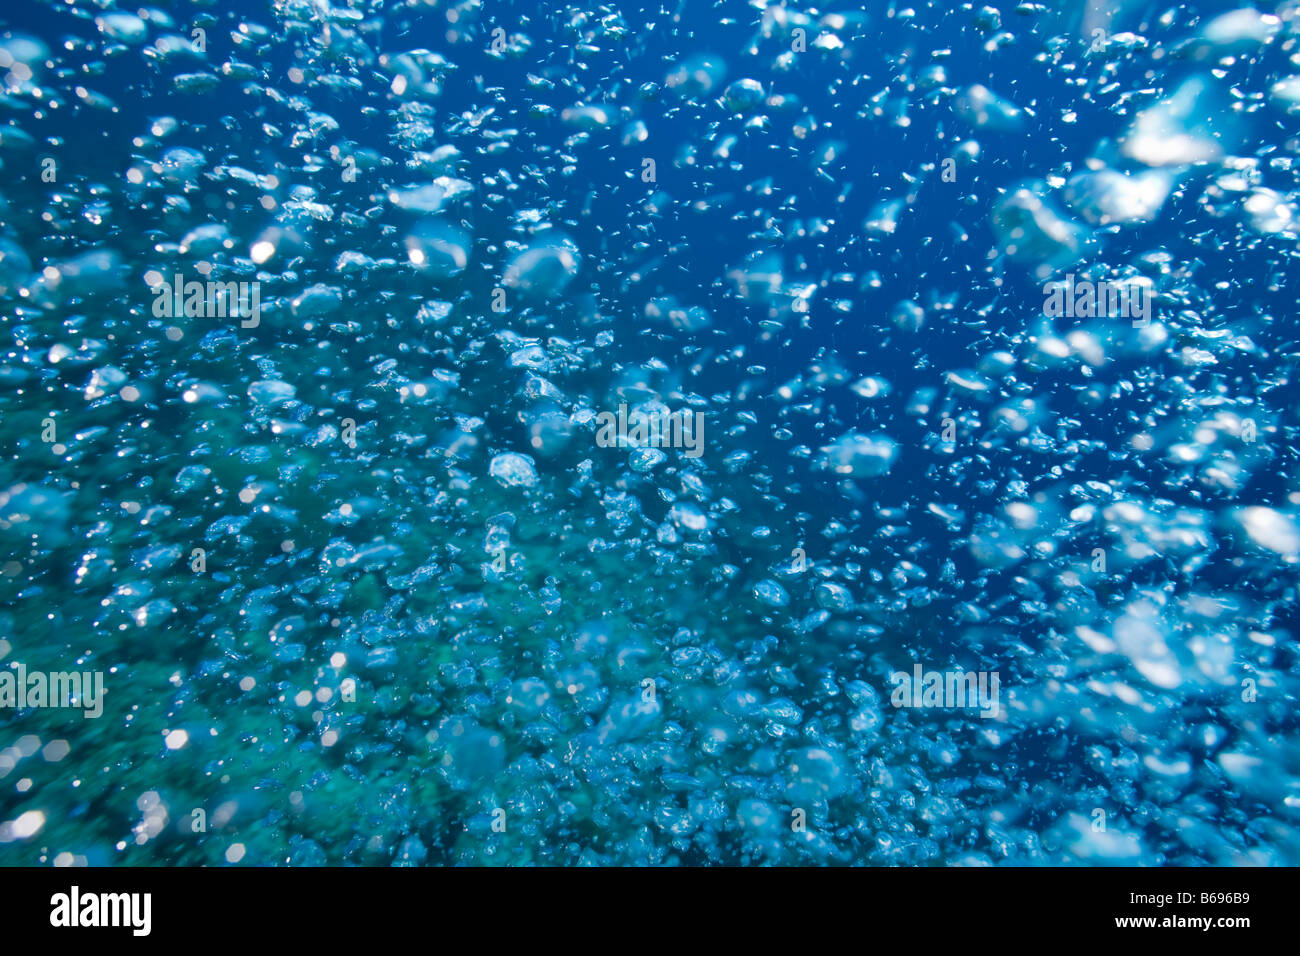 Bahamas New Providence Island Air bubbles from scuba divers swimming in Caribbean Sea Stock Photo